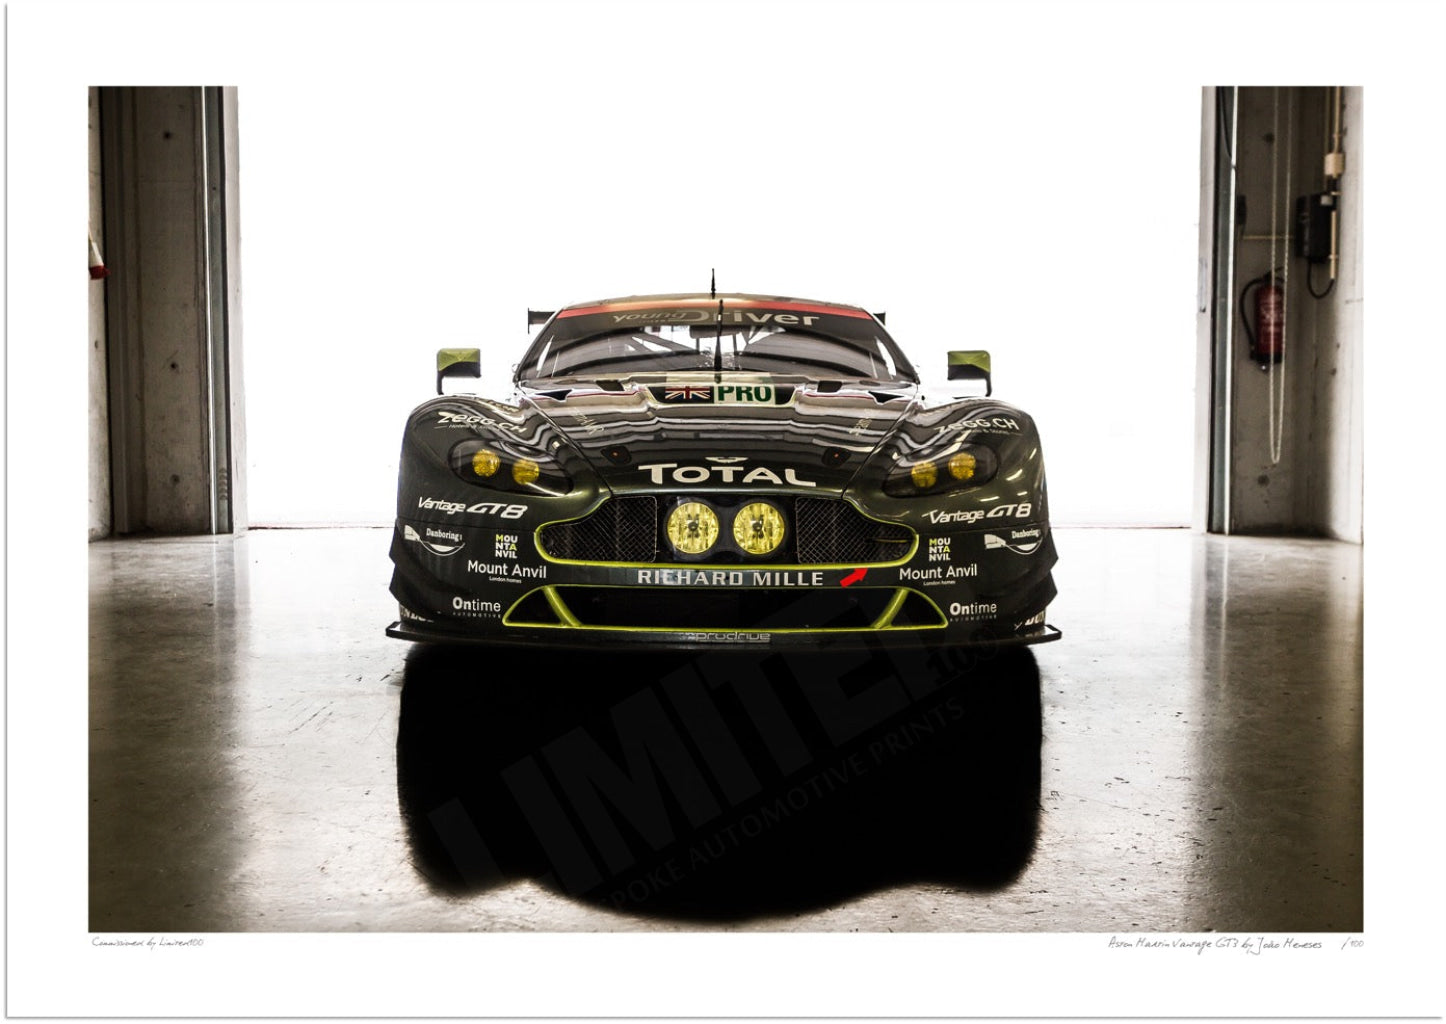 Aston Martin GT3 at Autódromo Internacional do Algarve